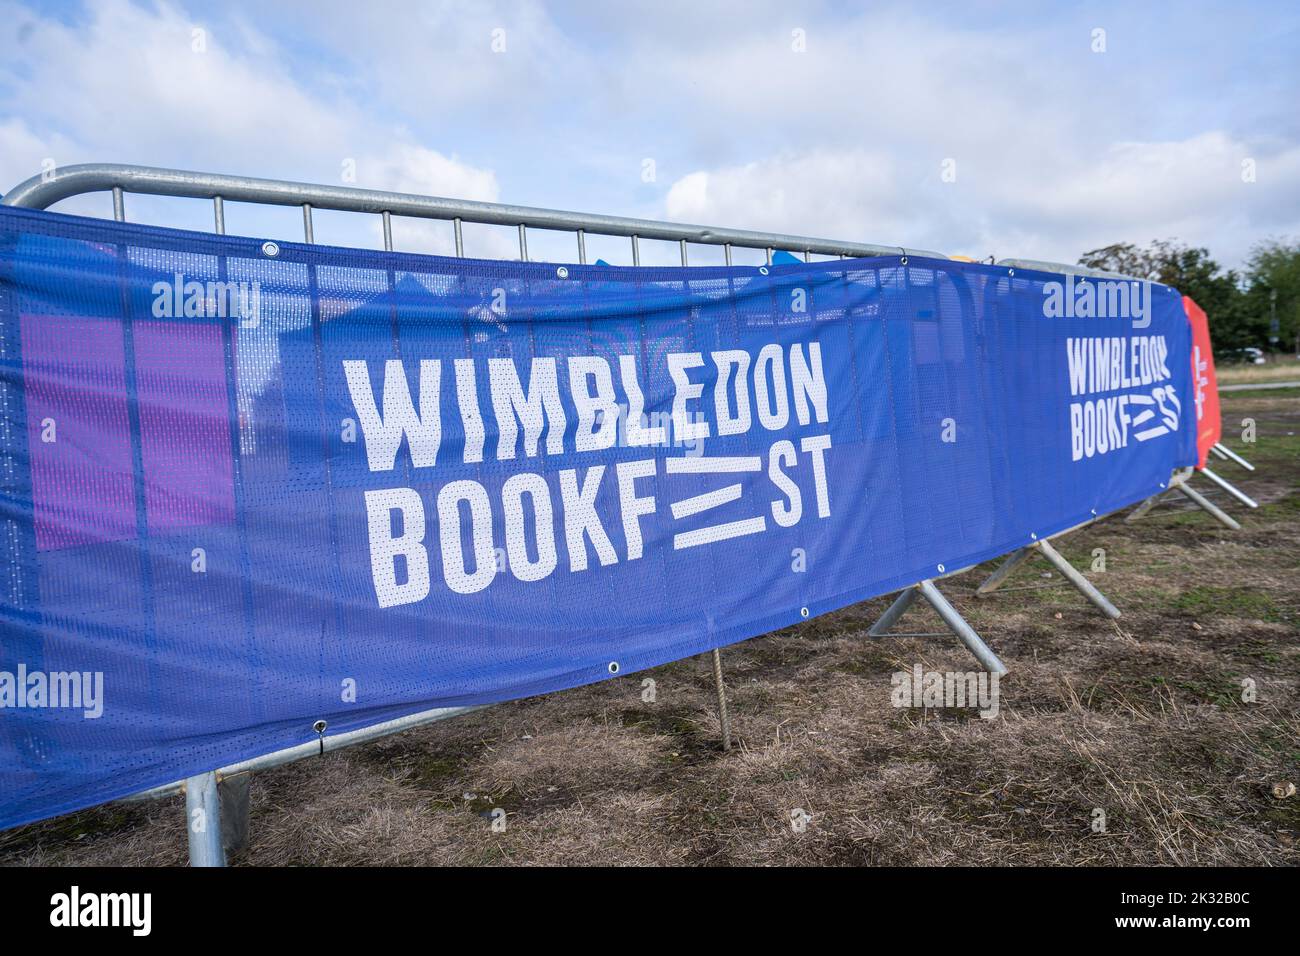 Banner advertising the Wimbledon bookfest, an annual literary event, Wimbledon, southwest London, UK Stock Photo